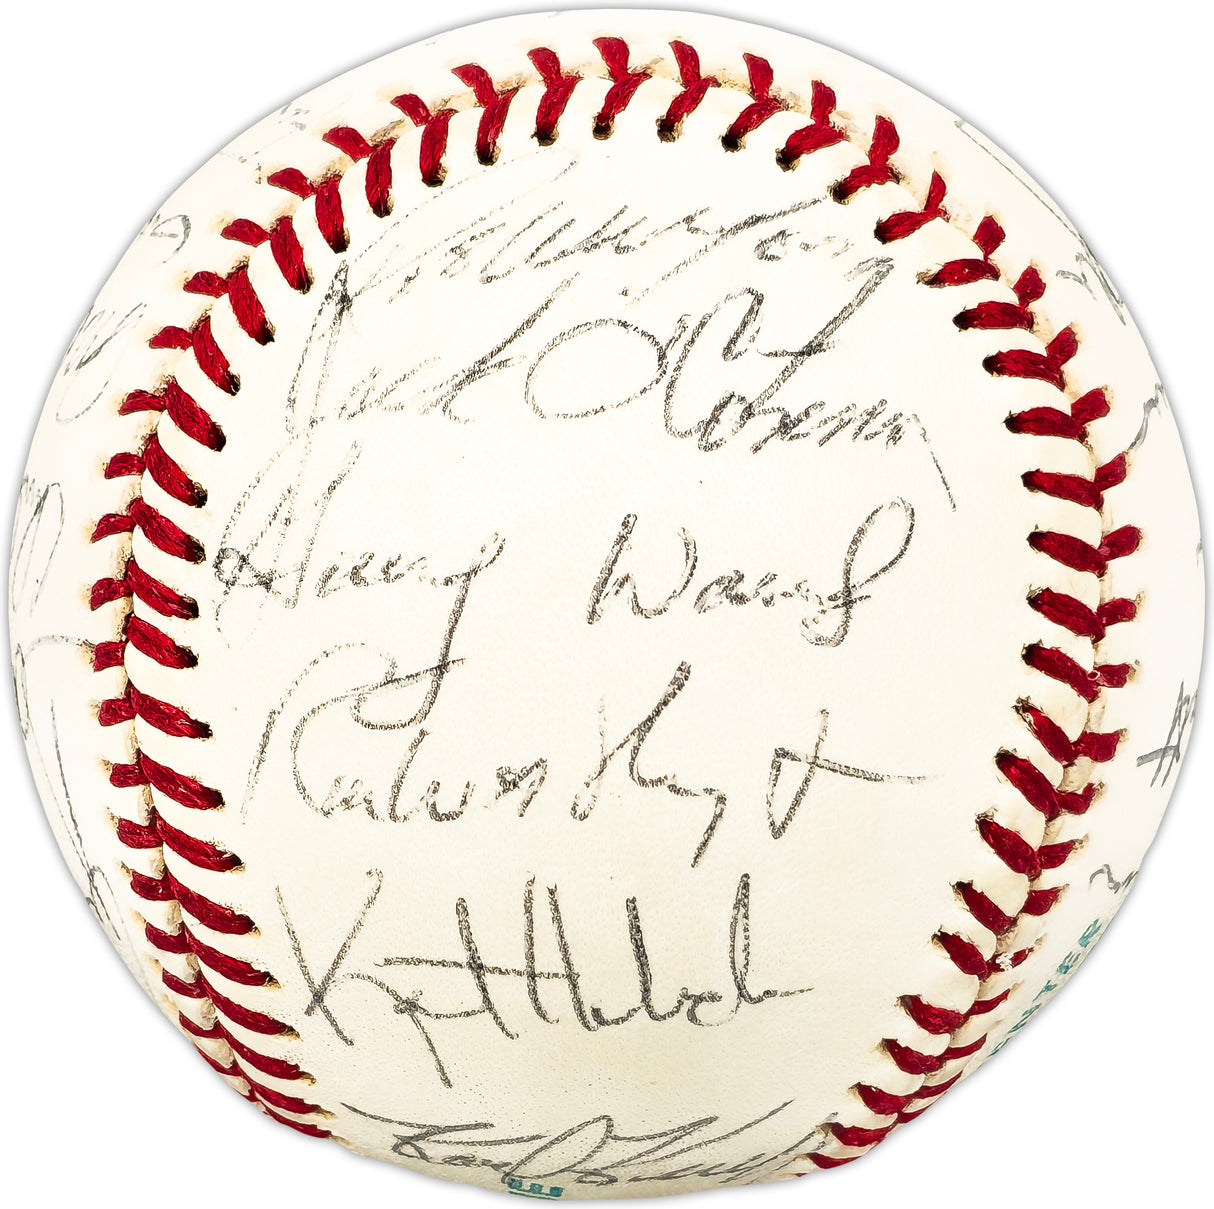 1981 Minnesota Twins Team Autographed Official Spalding MLB Baseball With 23 Signatures SKU #225432